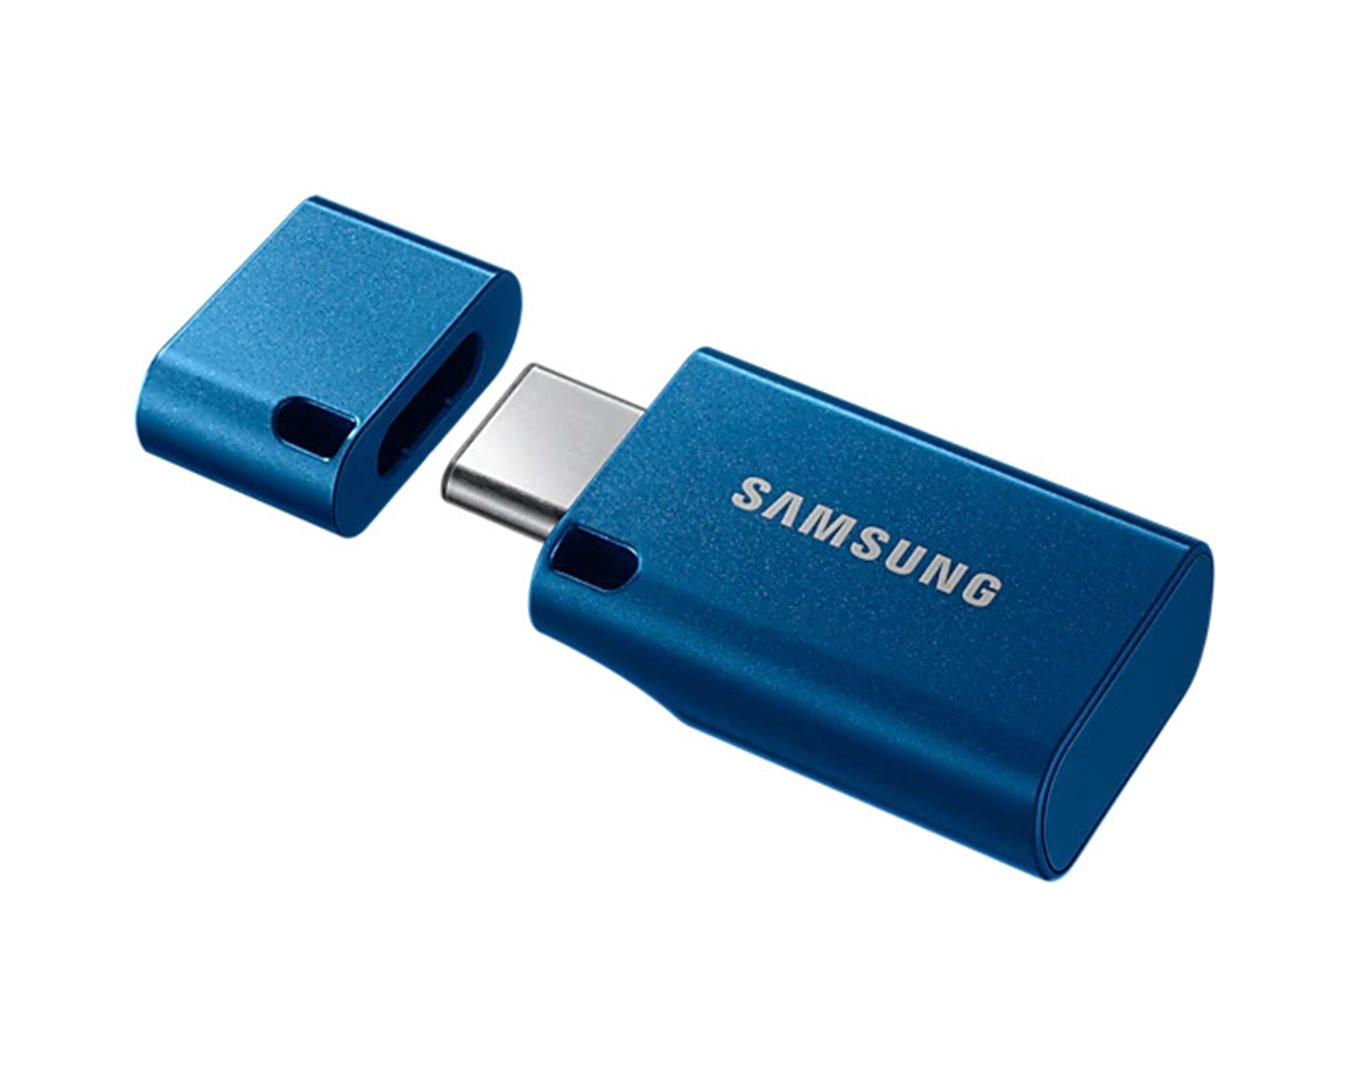 Samsung USB -C / 3.1 Flash Disk 64GB